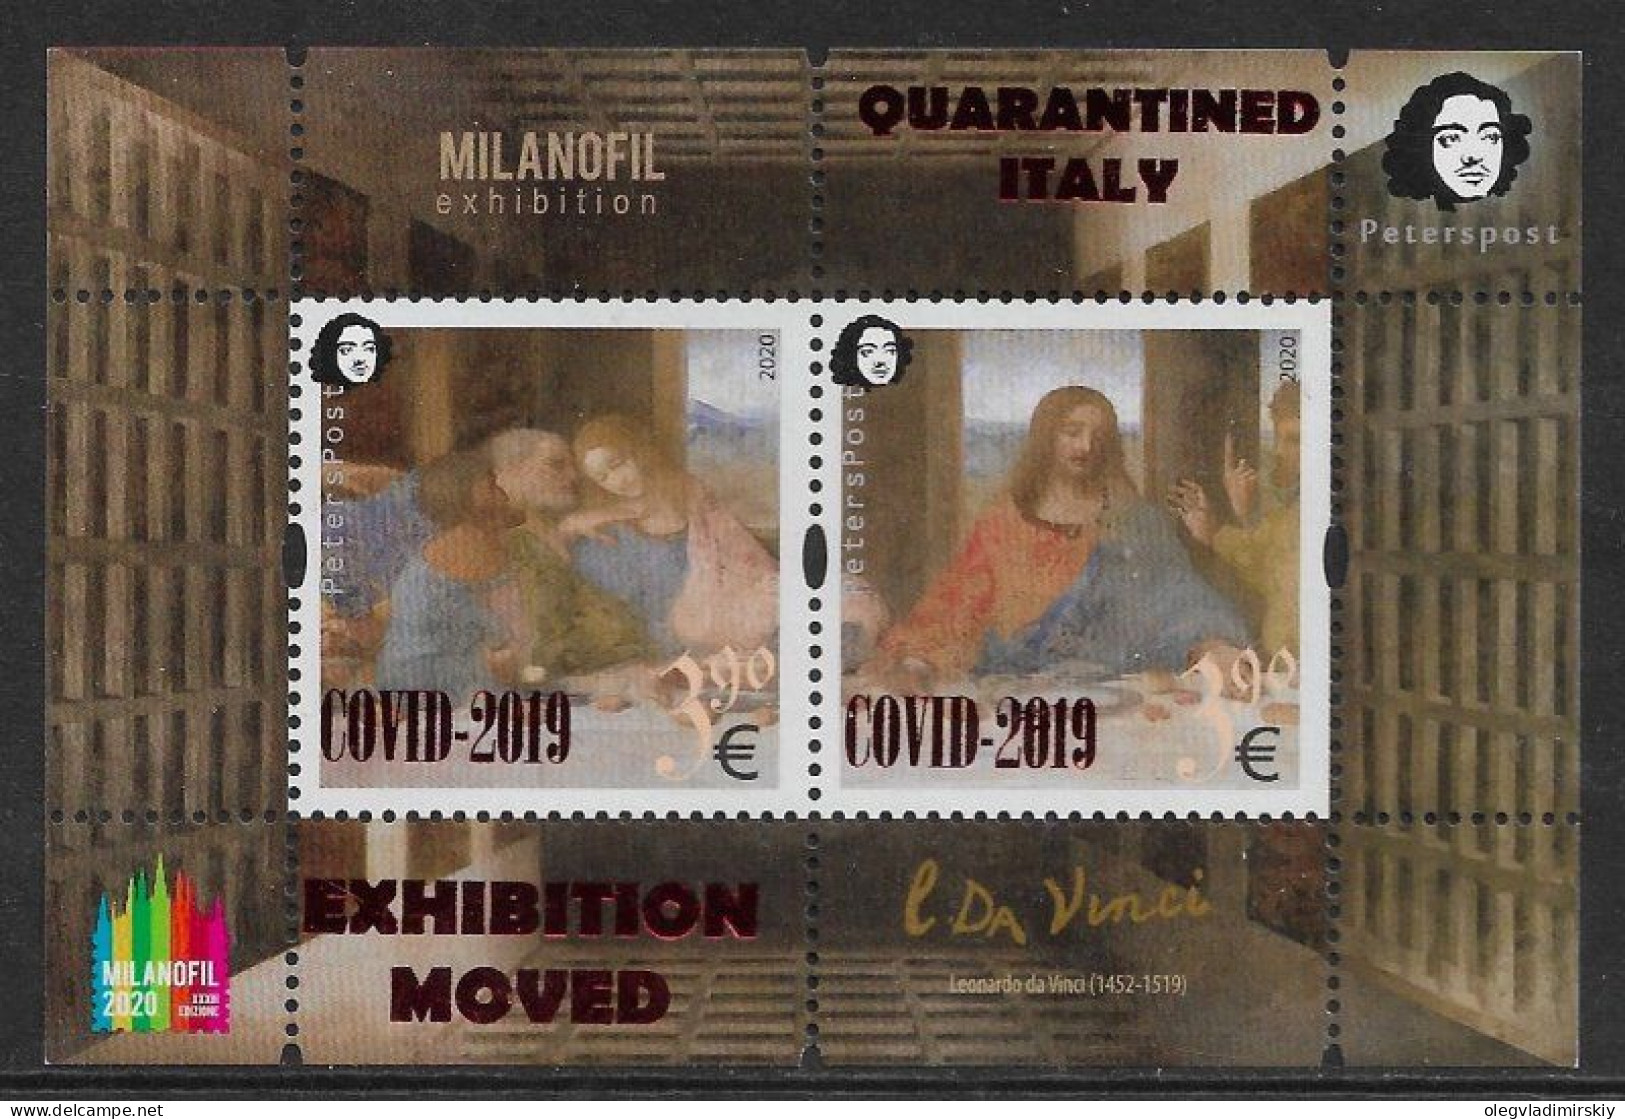 Finland 2020 Quarantined Italy COVID-2019 Leonardo Da Vinci MILANOFIL Exhibition Muved Peterspost Block Overprint MNH - Medicine